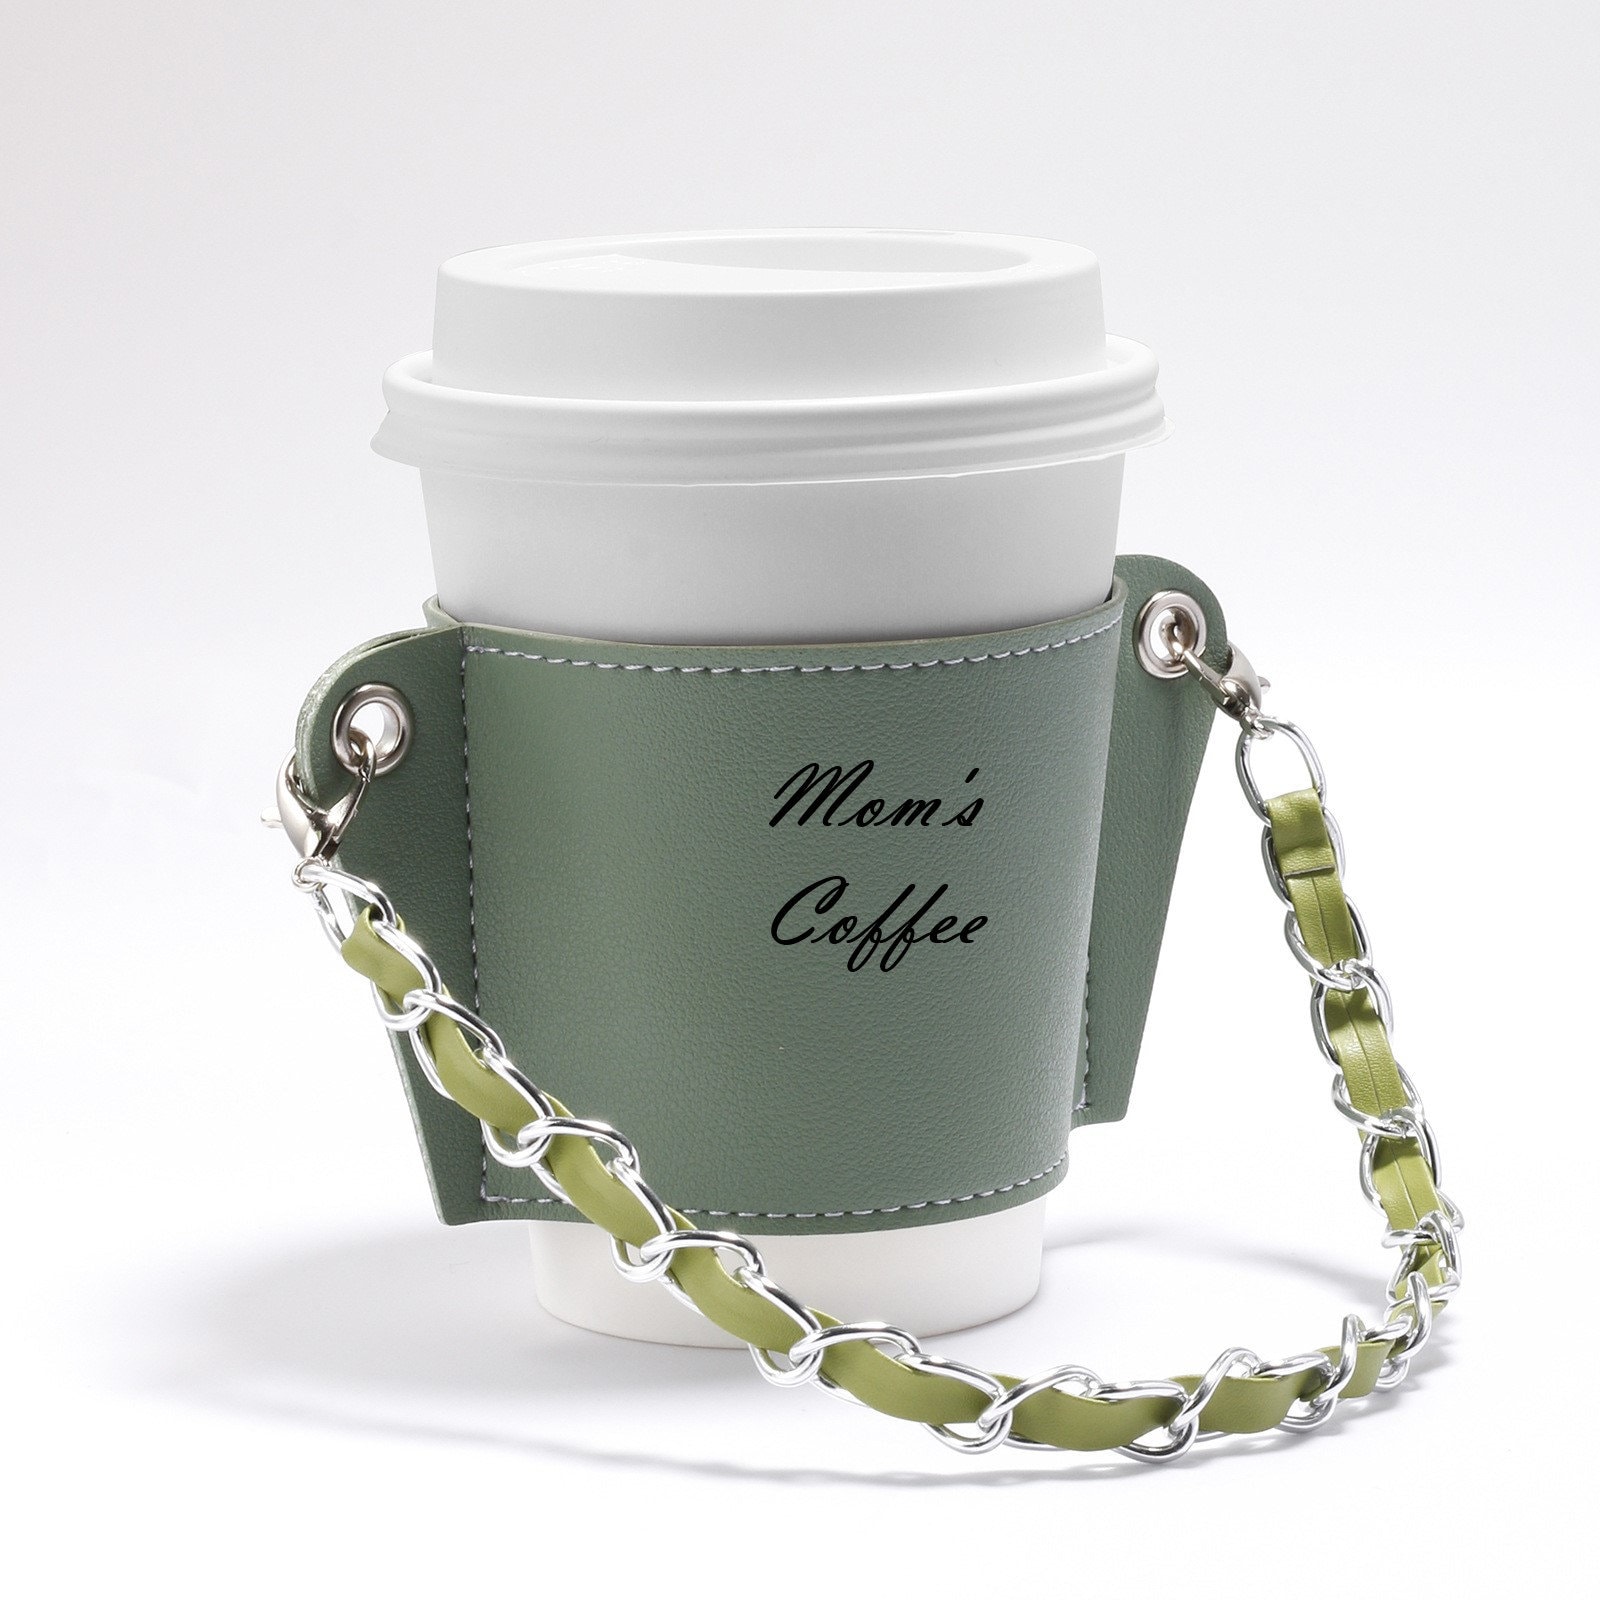 Champagne Sleeve  Coffee Cup Sleeve with Chain – Coffee & Chains